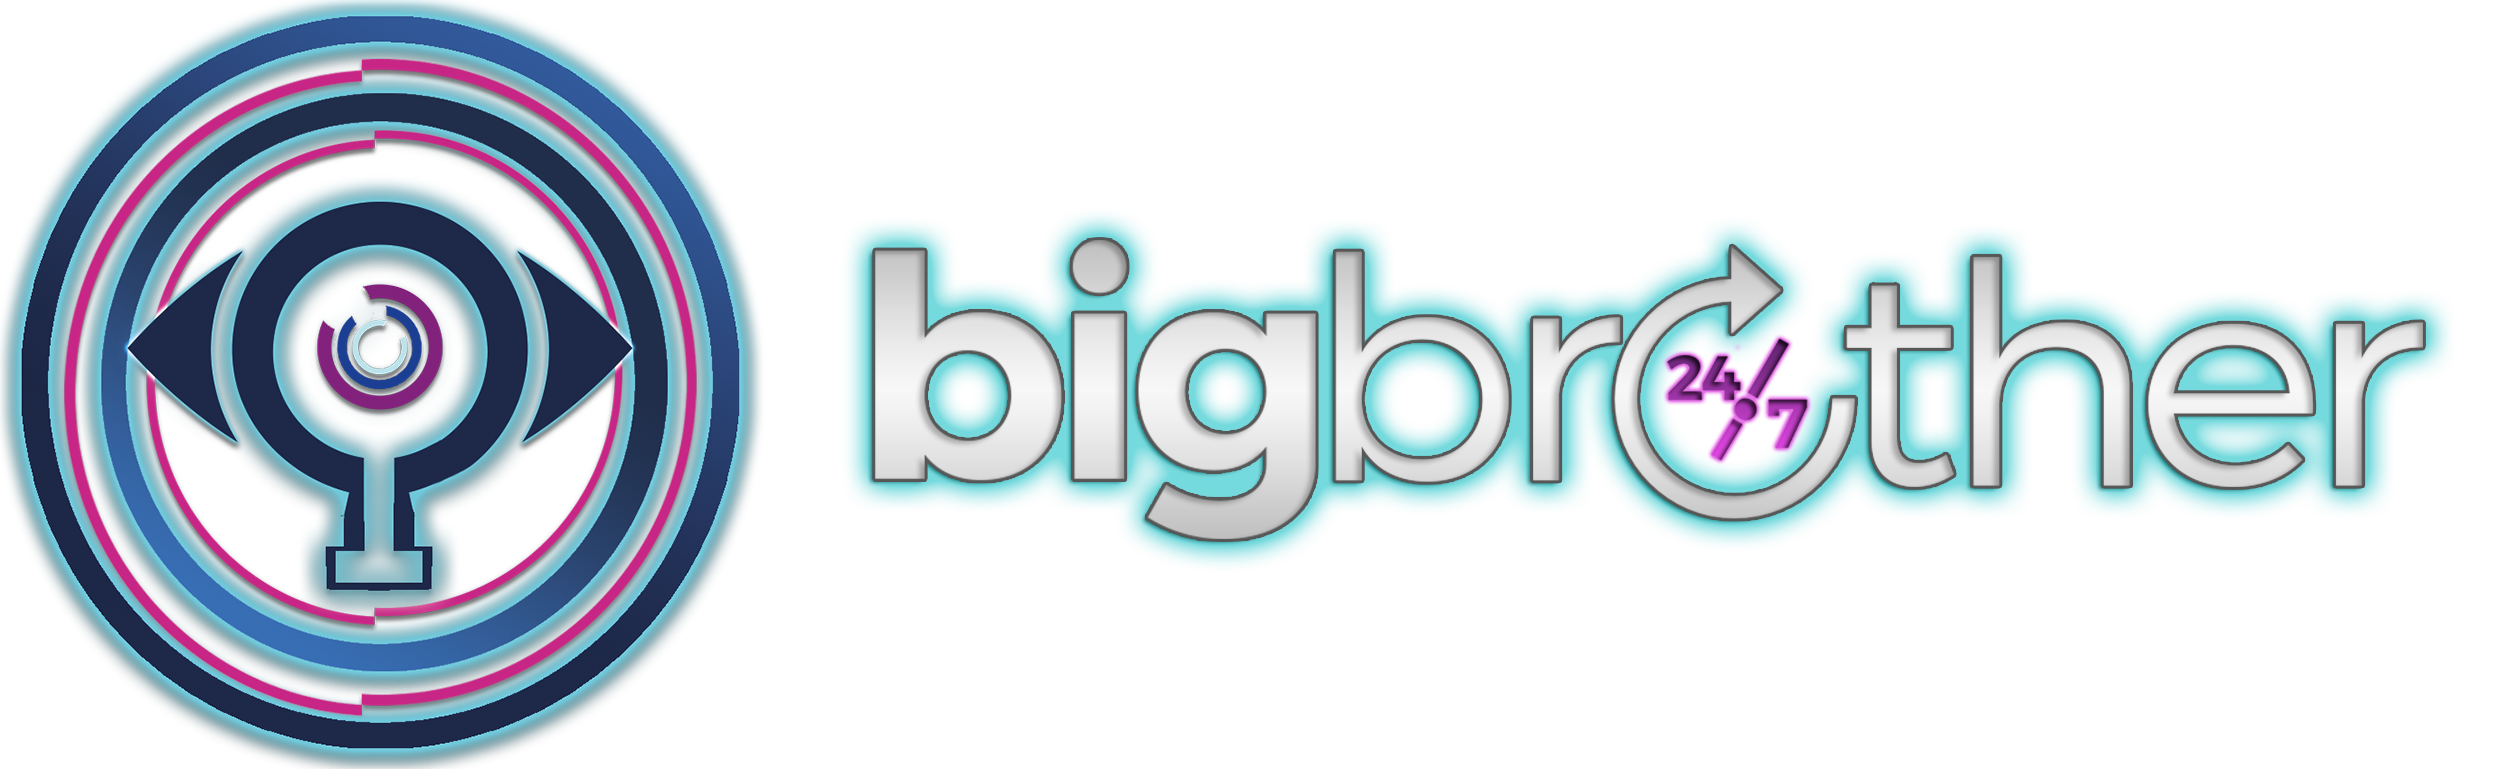 Big Brother 2020 | Celebrity Big Brother | Big Brother UK & Australia | Big Brother 24/7